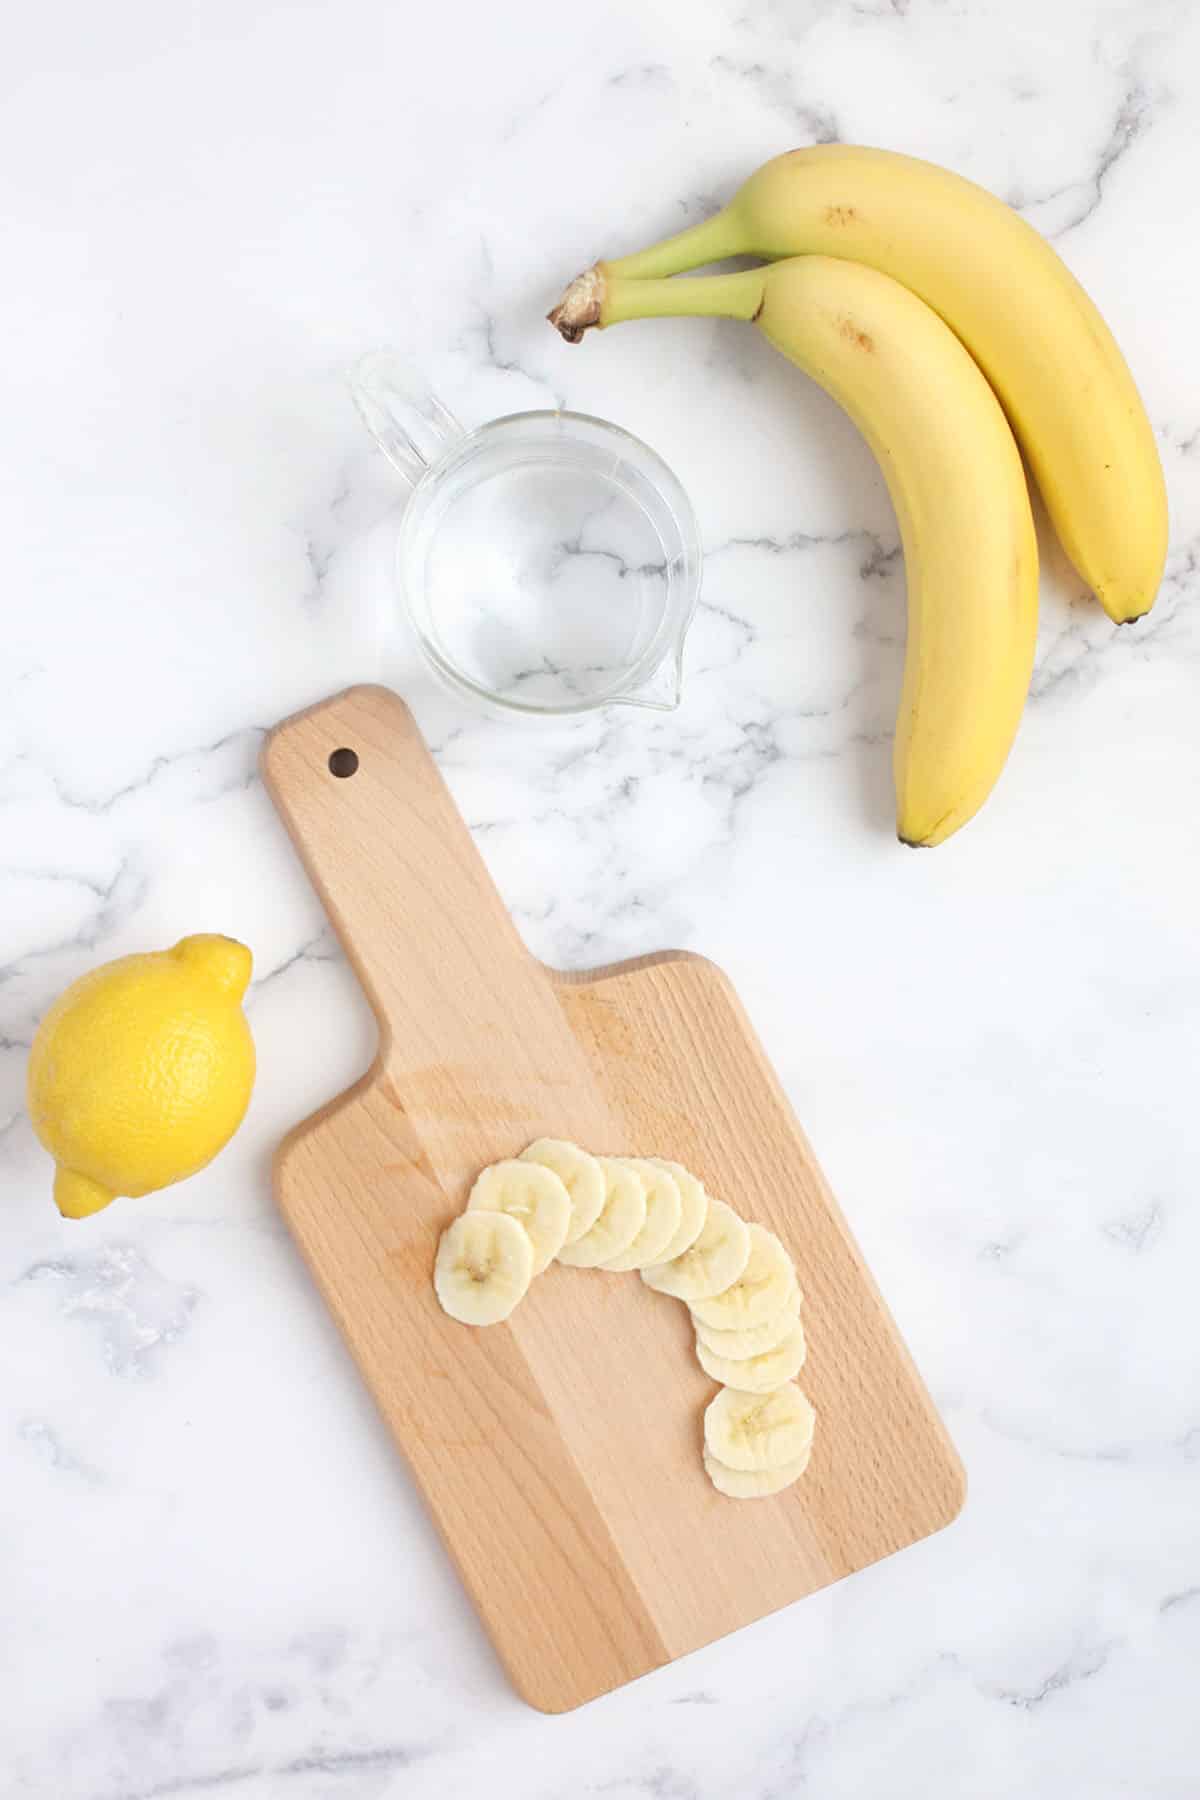 ingredients needed for  homemade banana chips: fresh bananas, water, and lemon juice